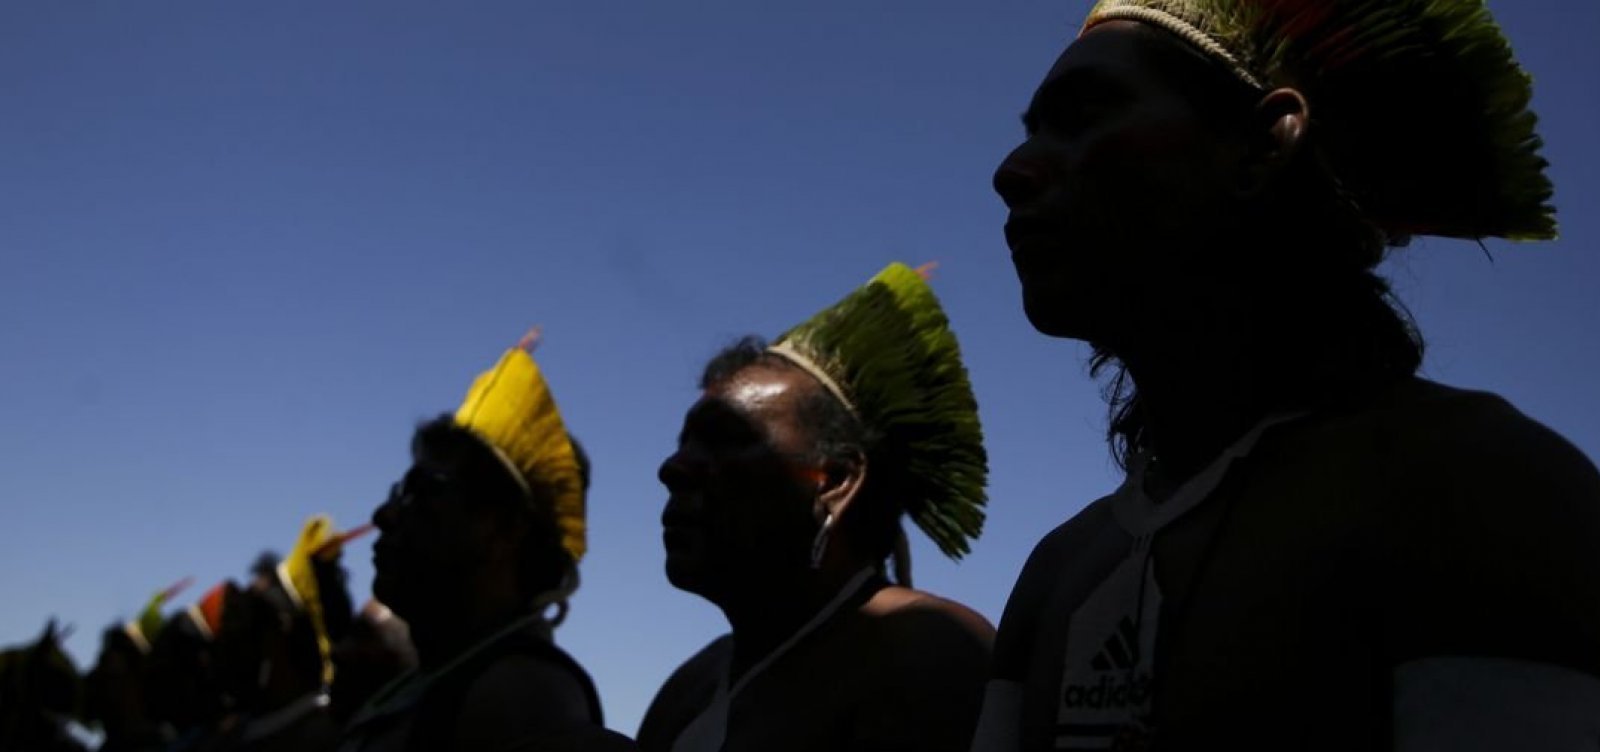 População indígena lidera casos de suicídio no Brasil, aponta estudo